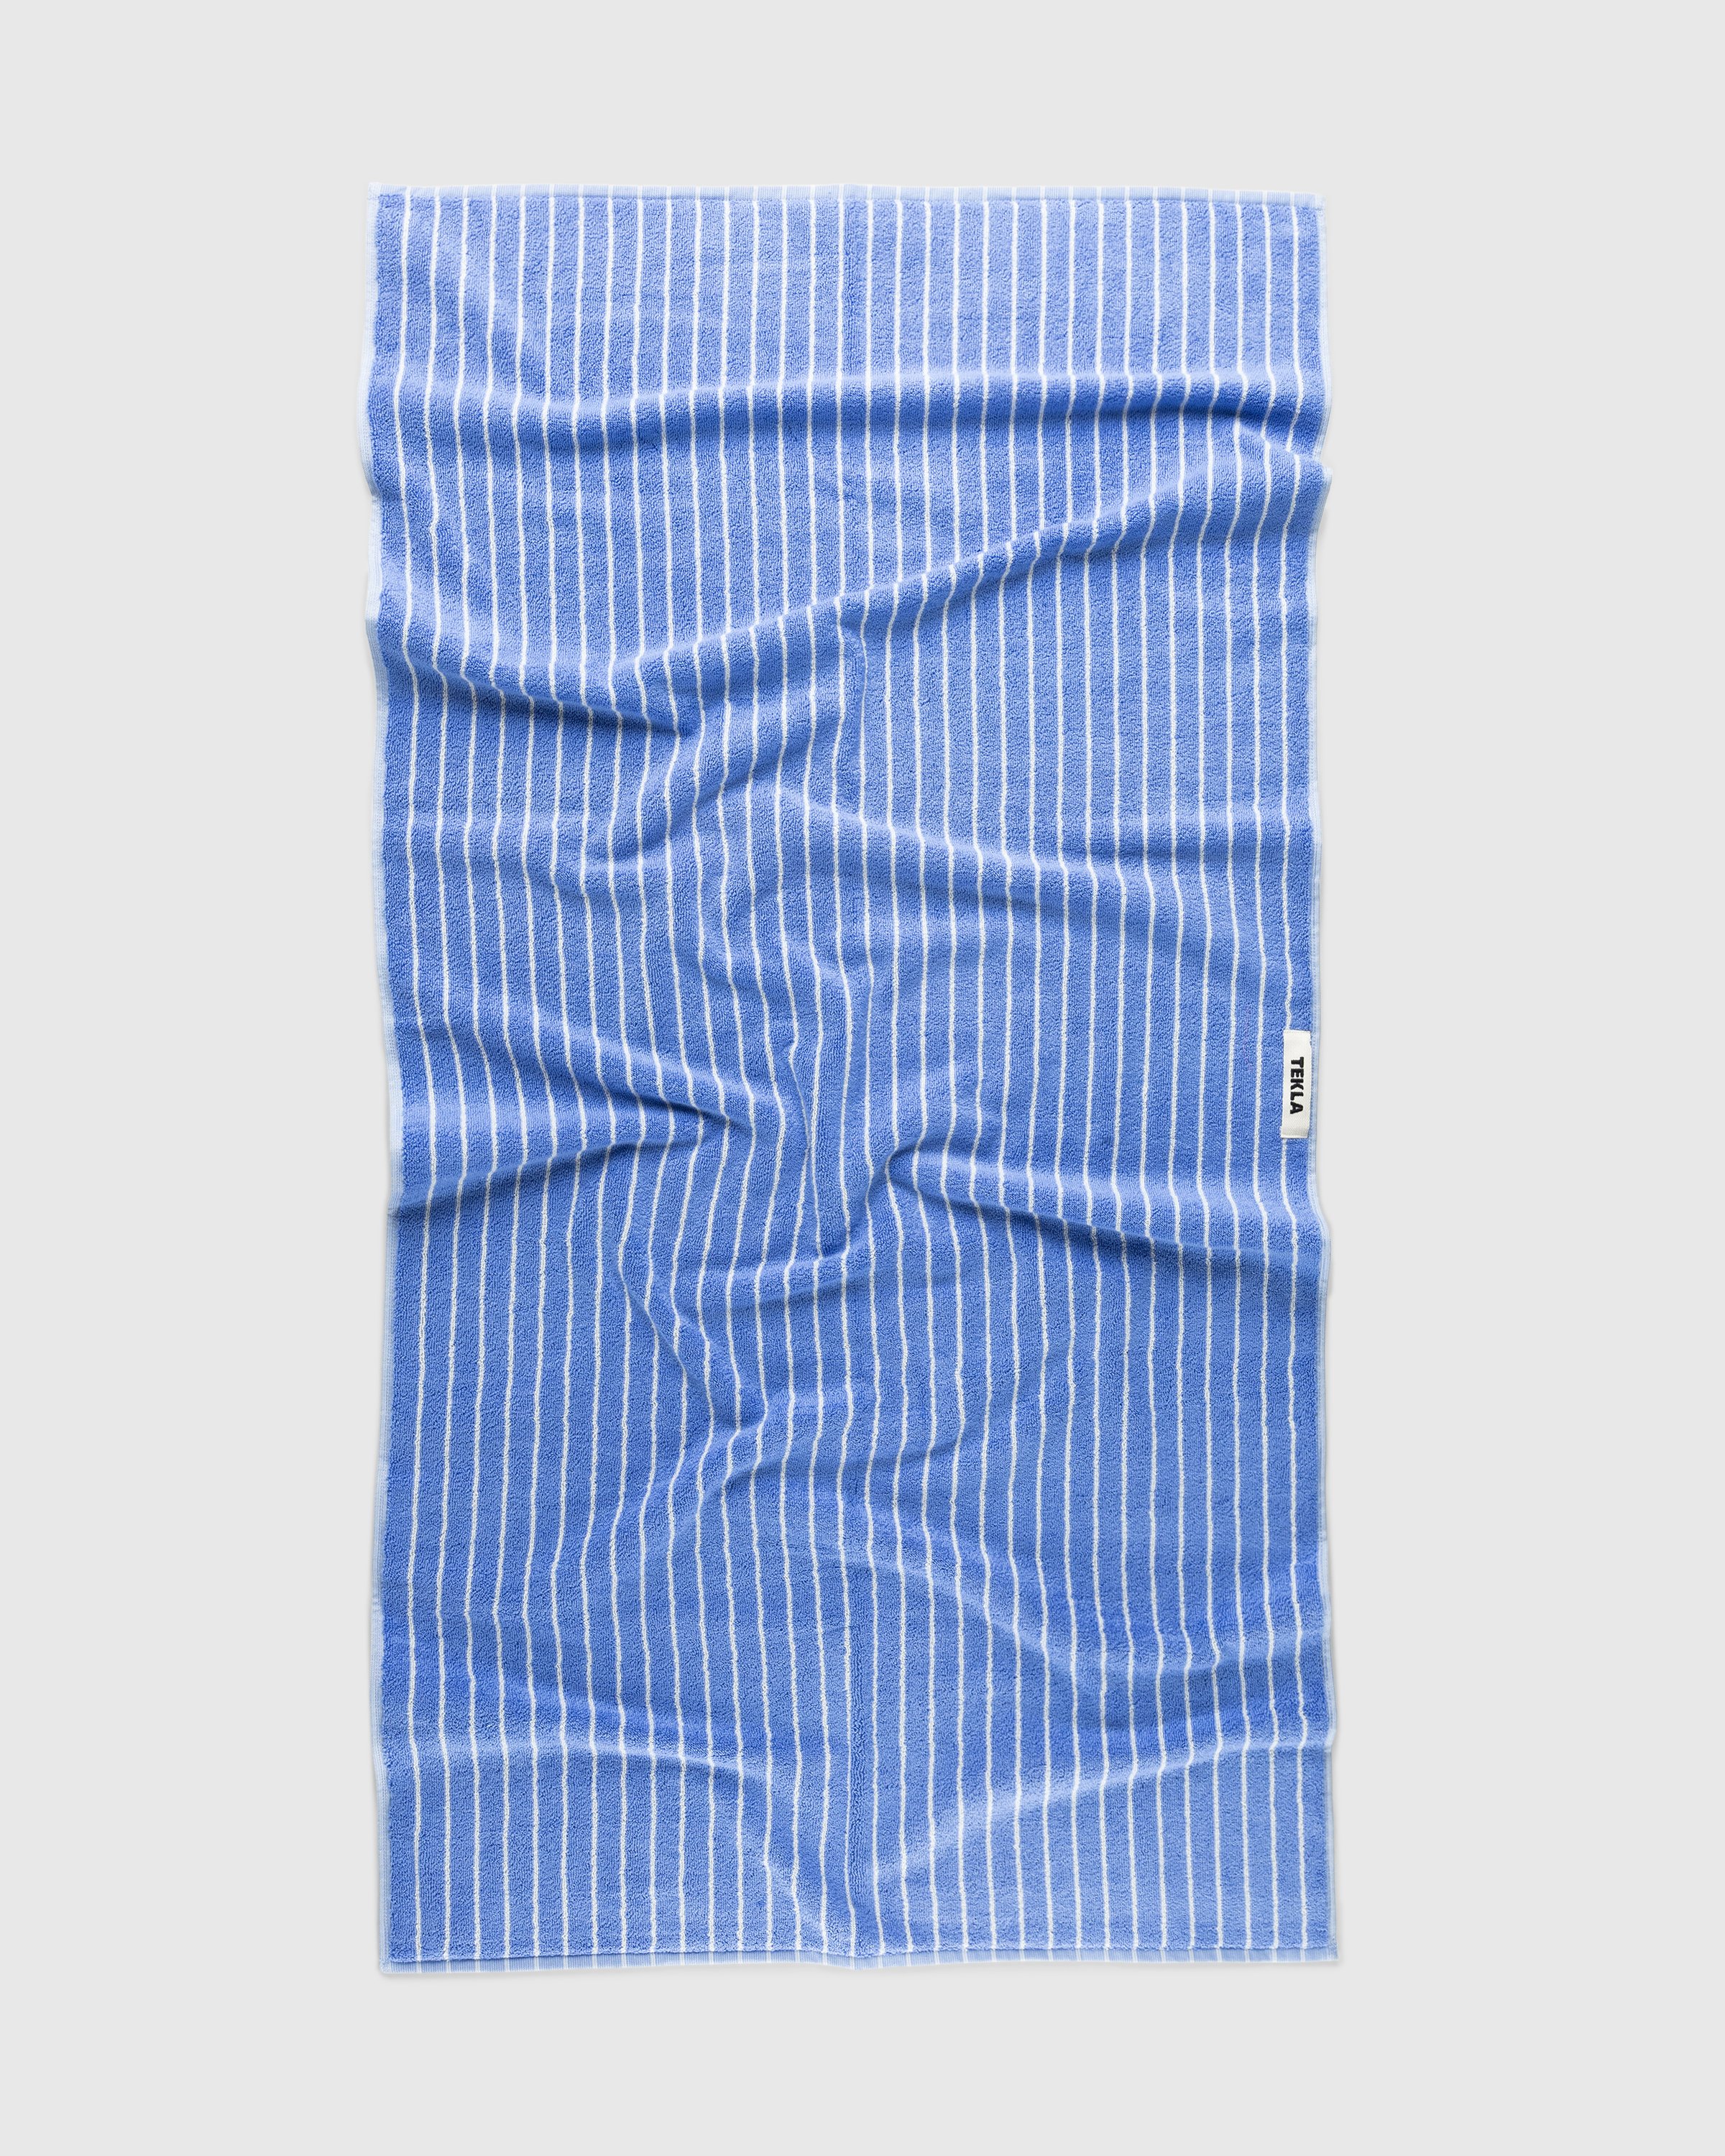 Tekla - Bath Towel 70x140 Clear Blue Stripes - Lifestyle - Blue - Image 1